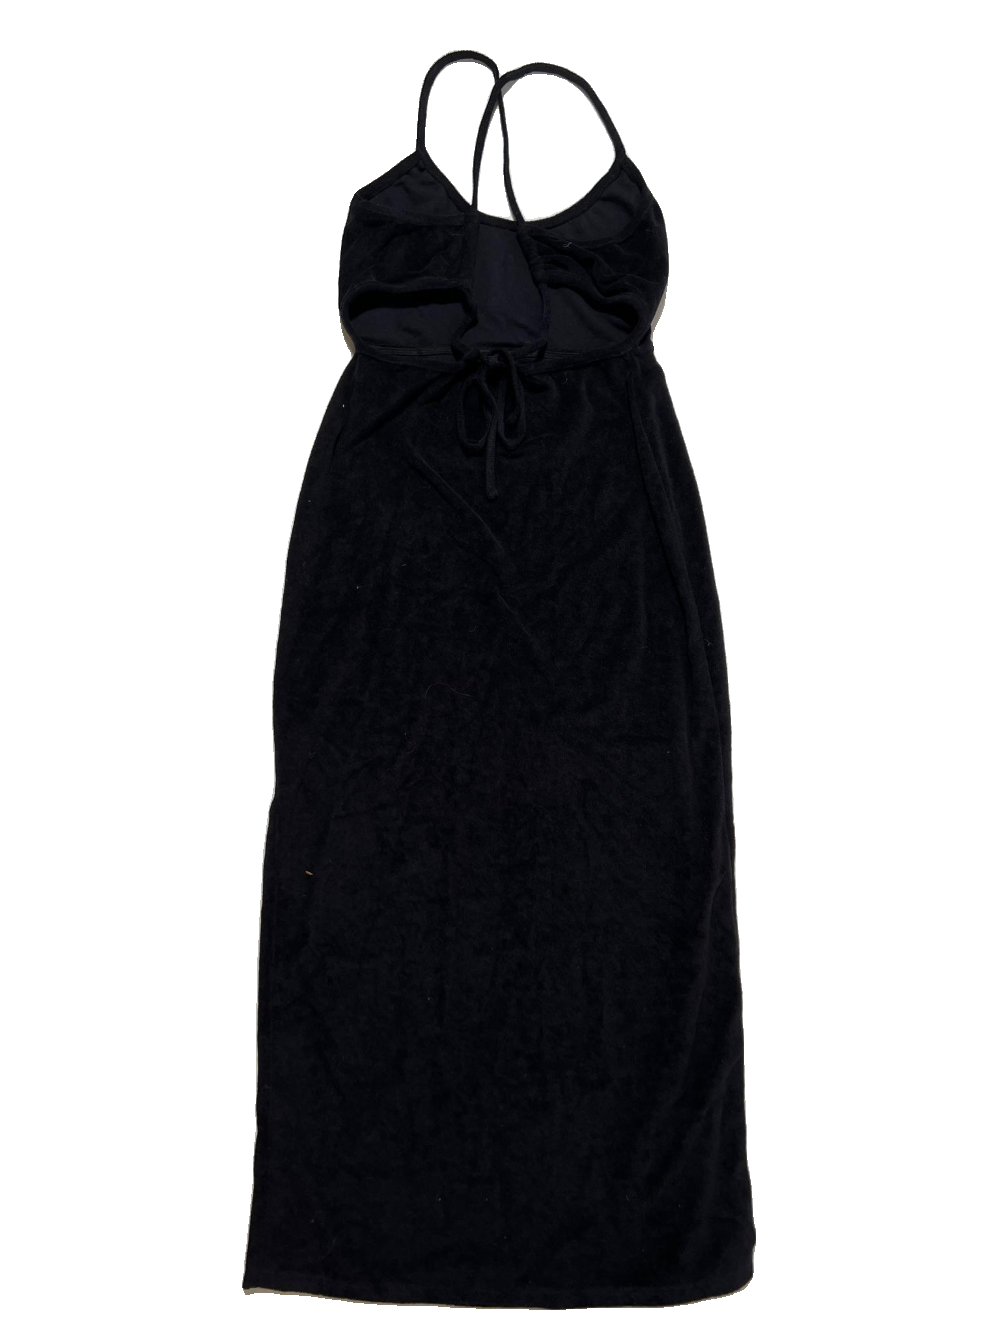 WAYF- Black Maxi Dress